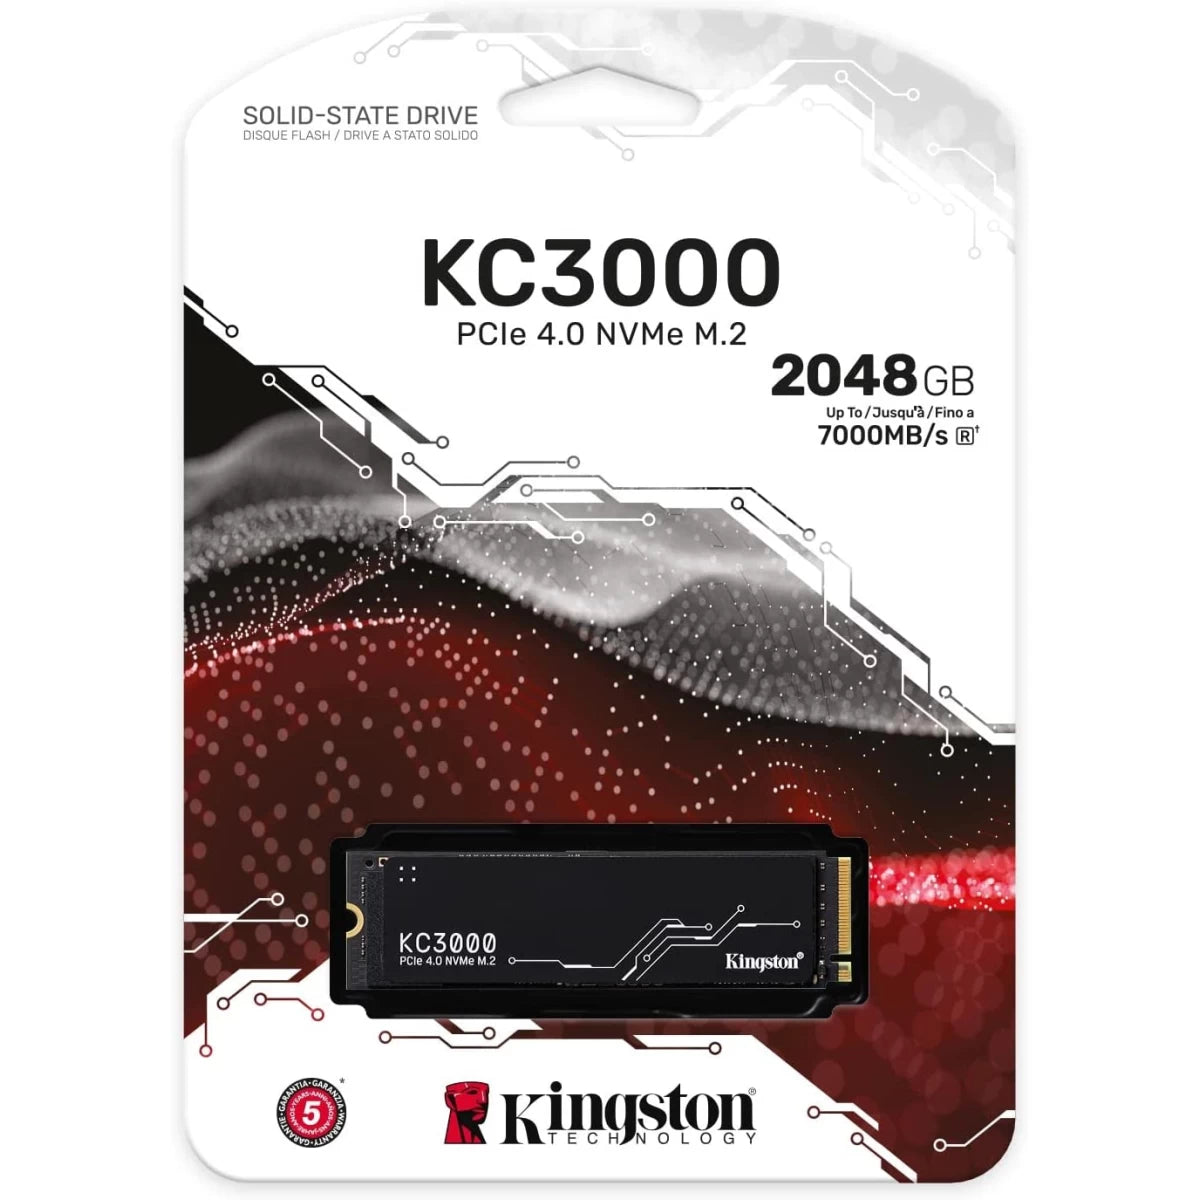 Kingston KC3000 2TB PCIe 4.0 NVMe M.2 SSD up to 7,000MB